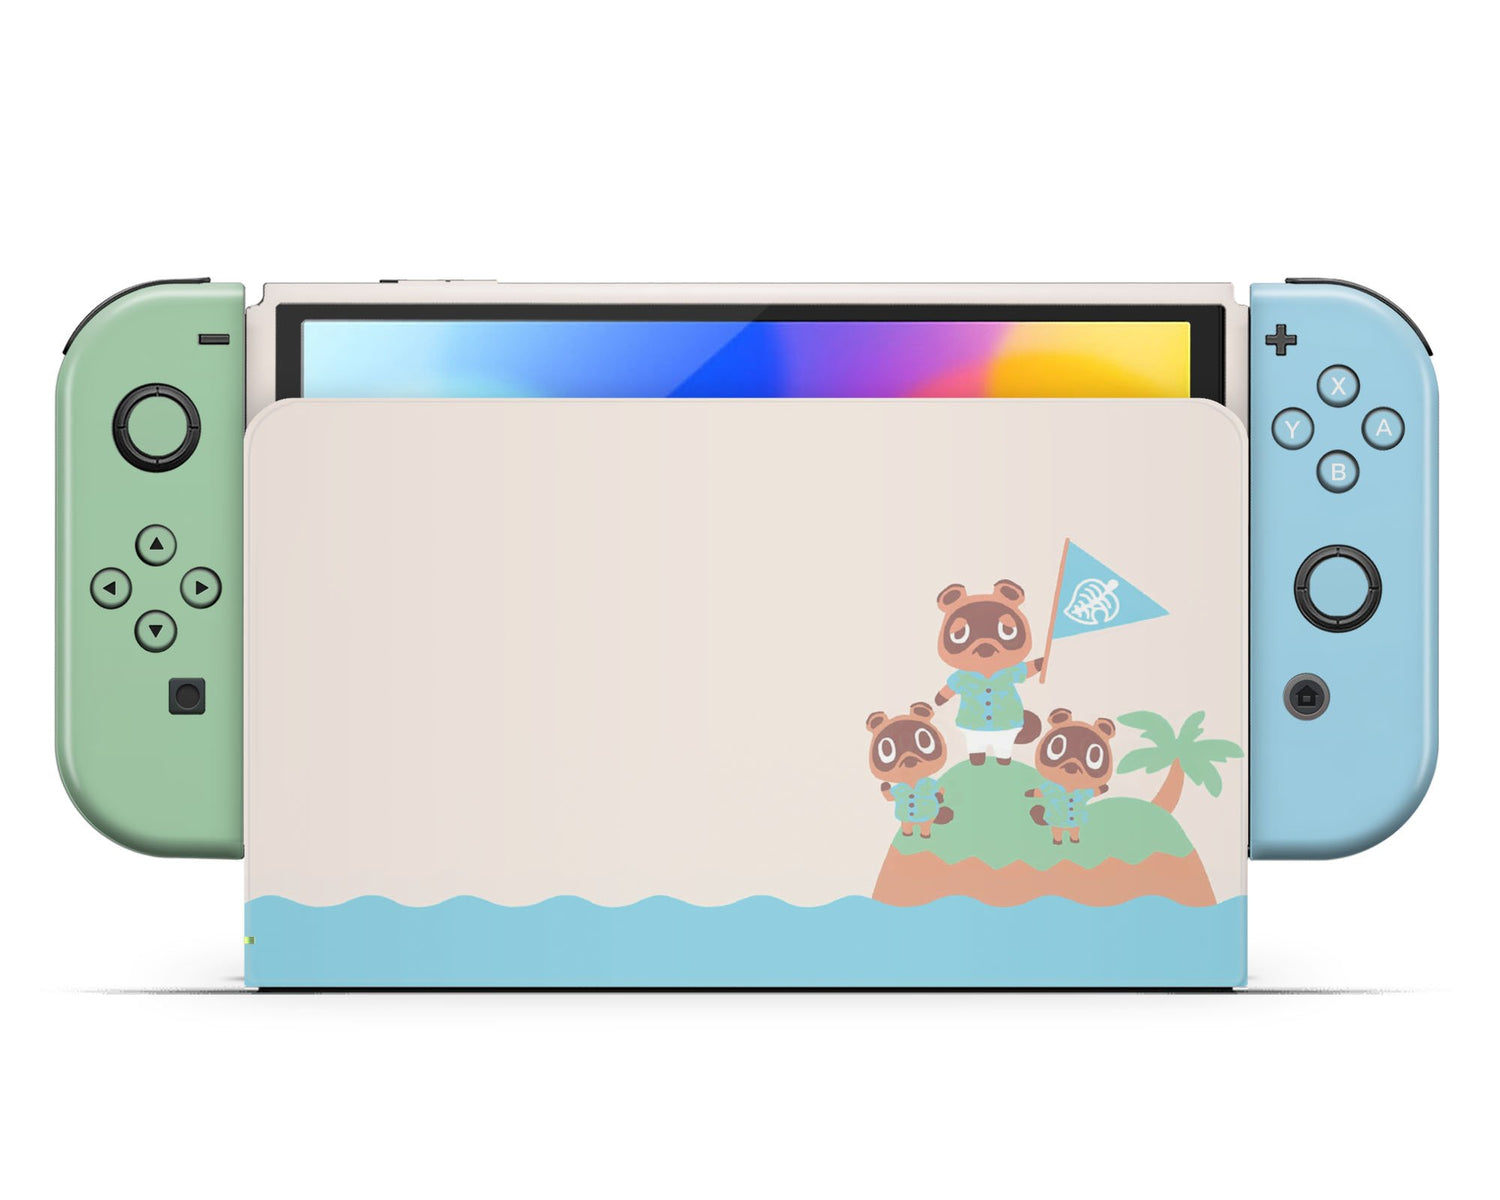 Lux Skins Nintendo Switch OLED Animal Crossing New Horizons Full Set Skins - Pop culture Animal Crossing Skin